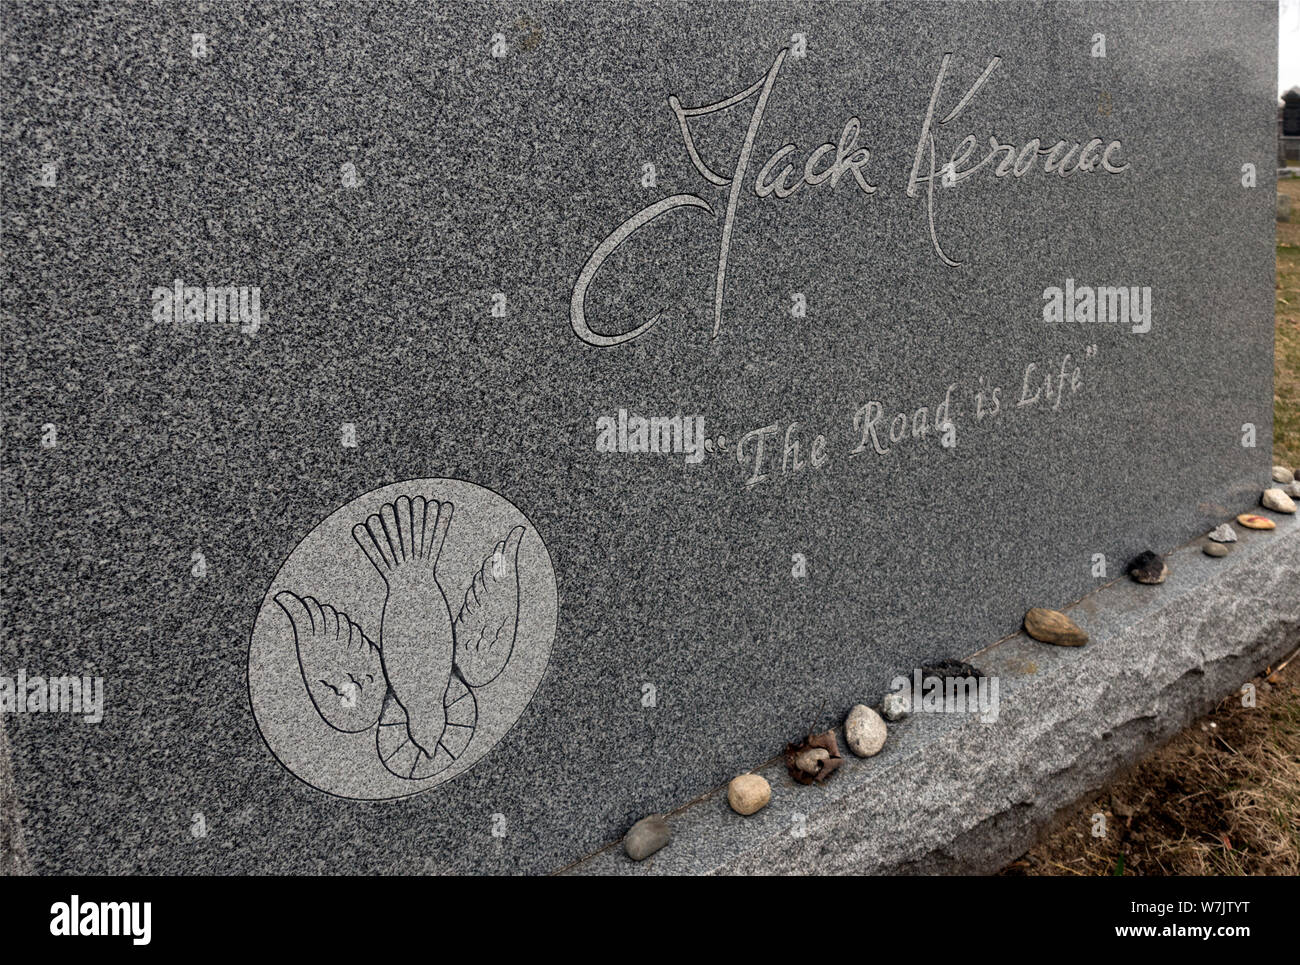 Jack Kerouac lapide in Lowell MA Foto Stock